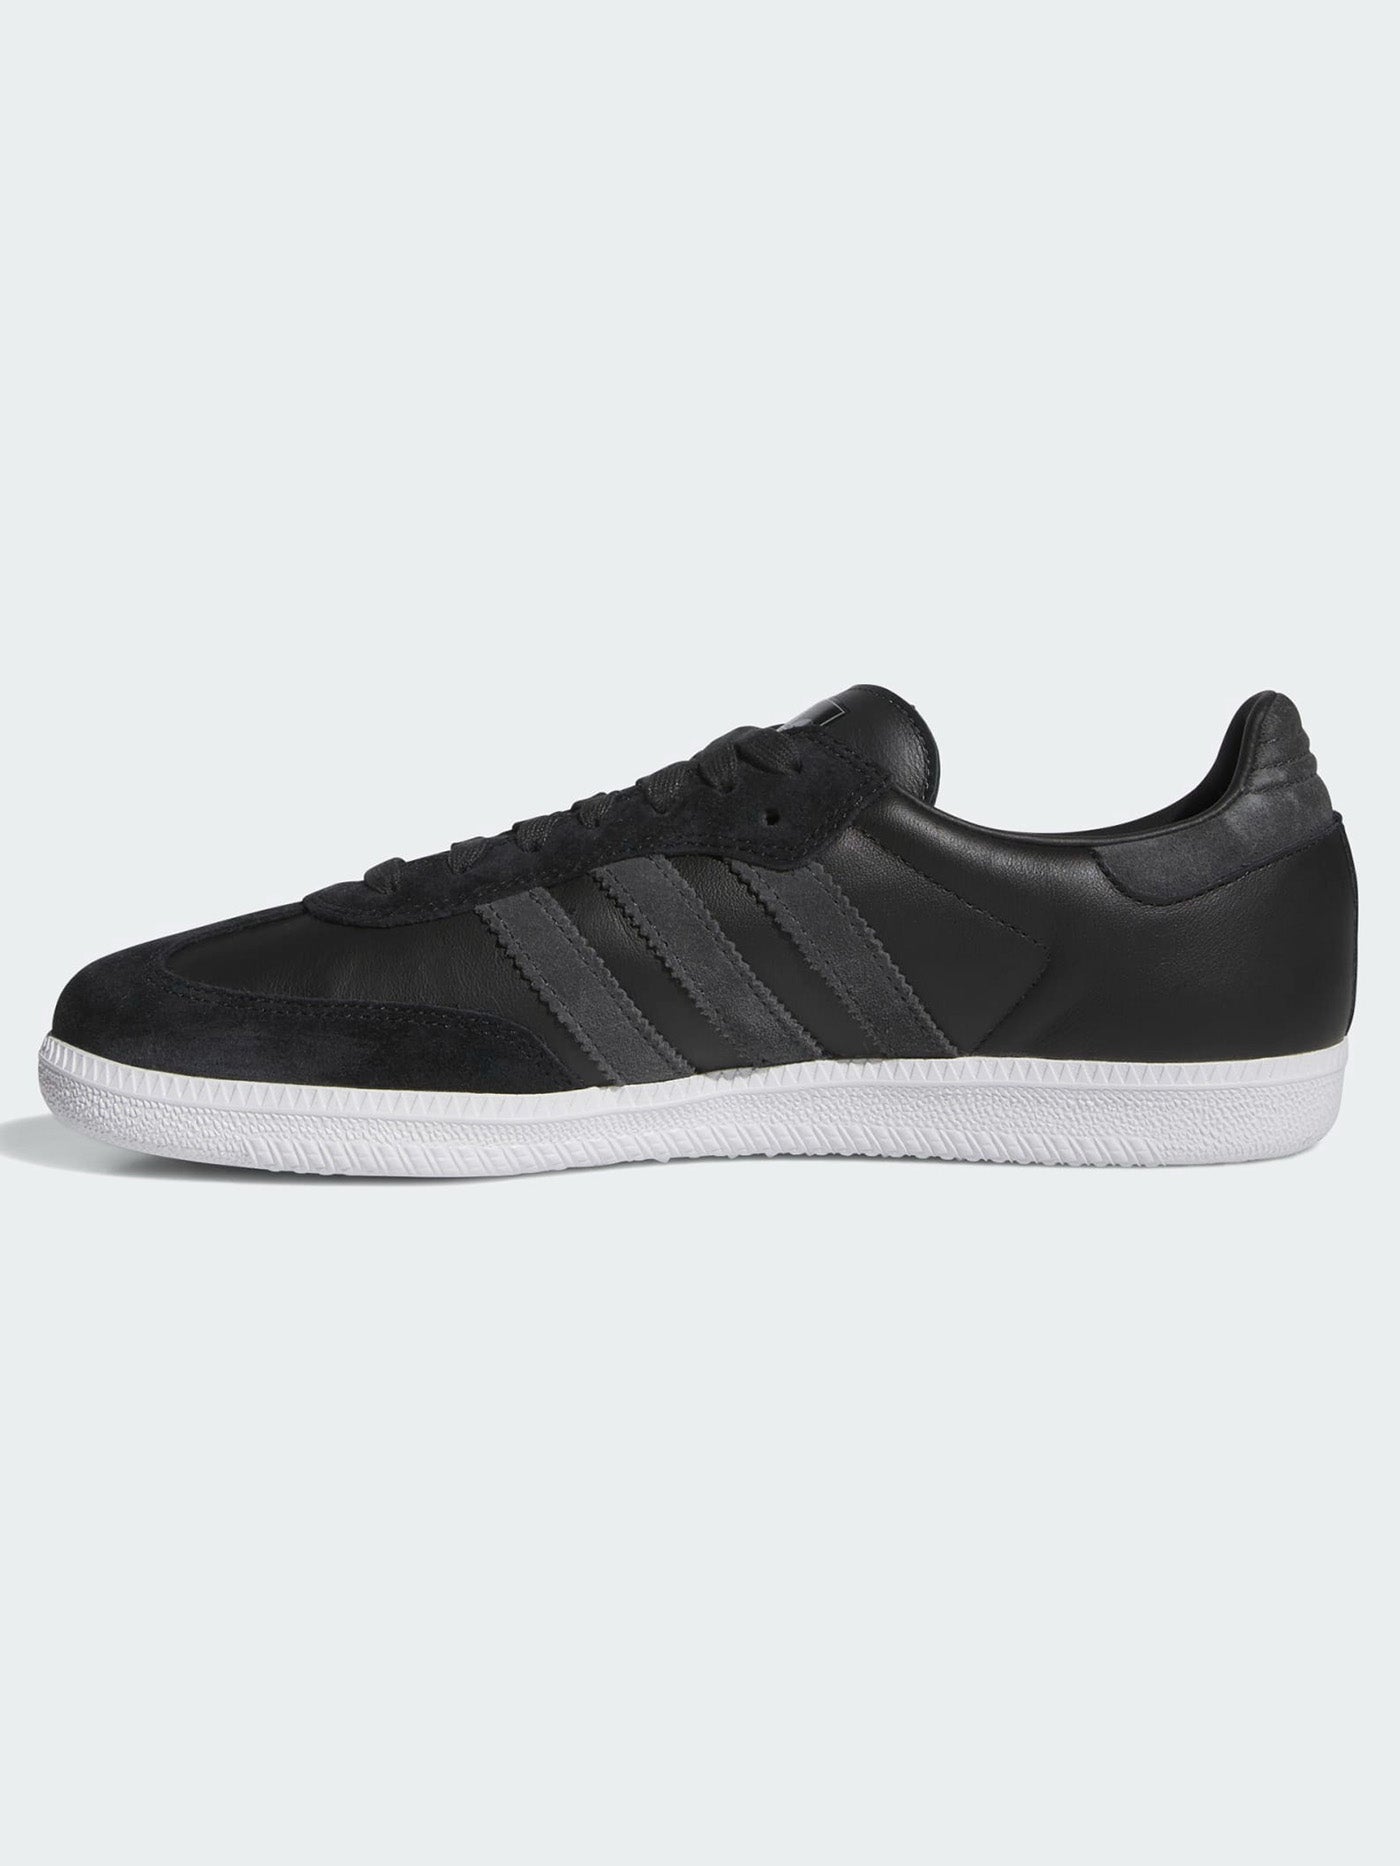 Adidas Fall 2023 Samba ADV Core Black/Carbon/Silver Shoes | EMPIRE